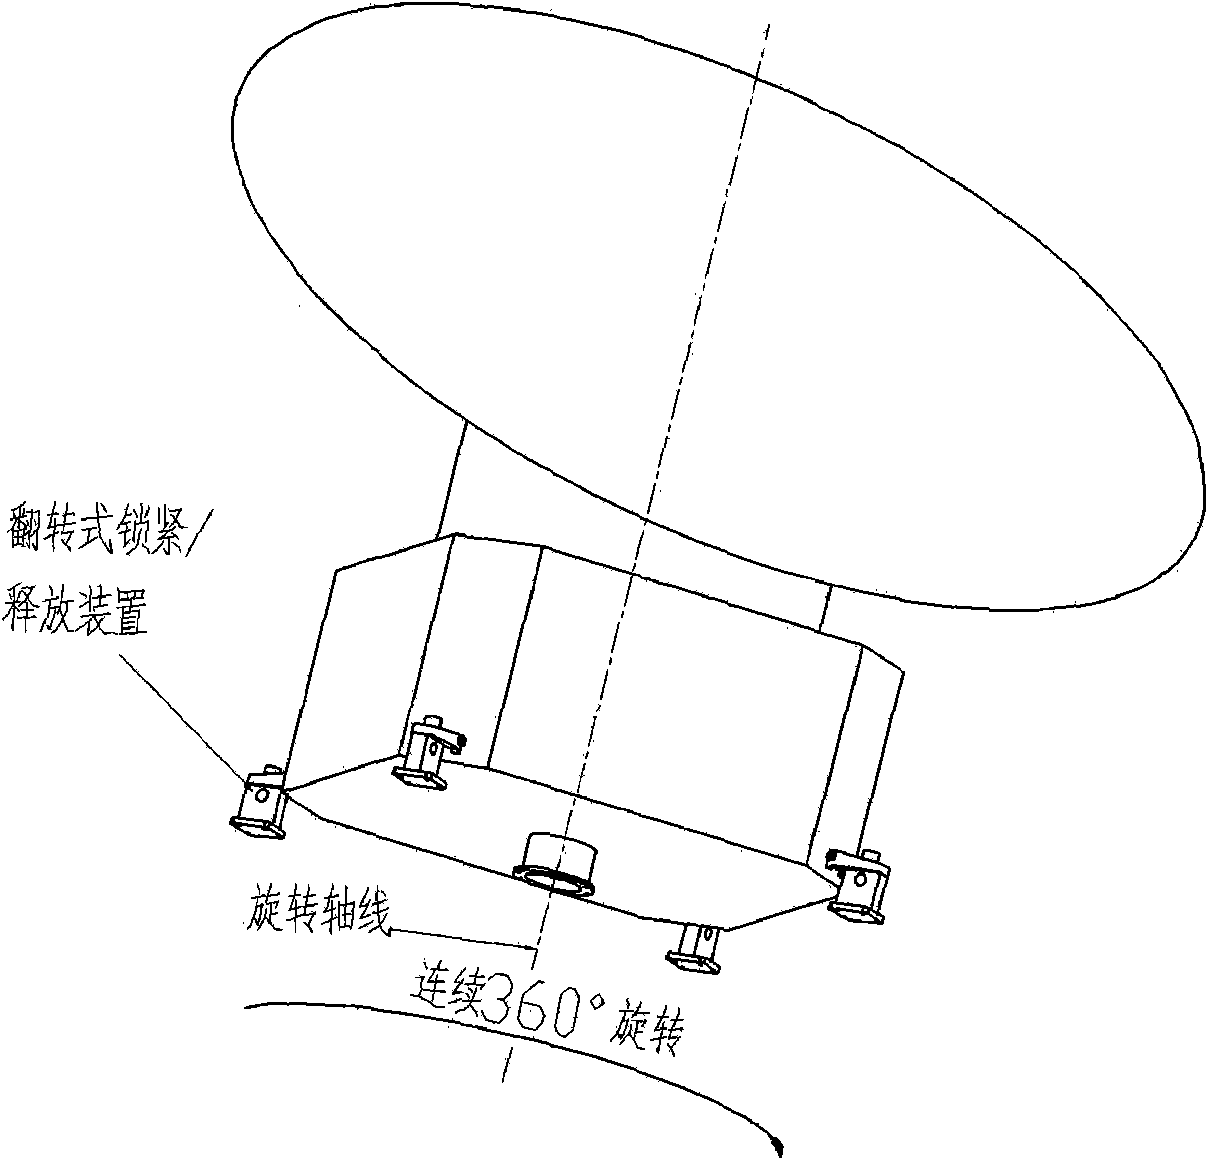 Turnover space-borne antenna locking releasing device